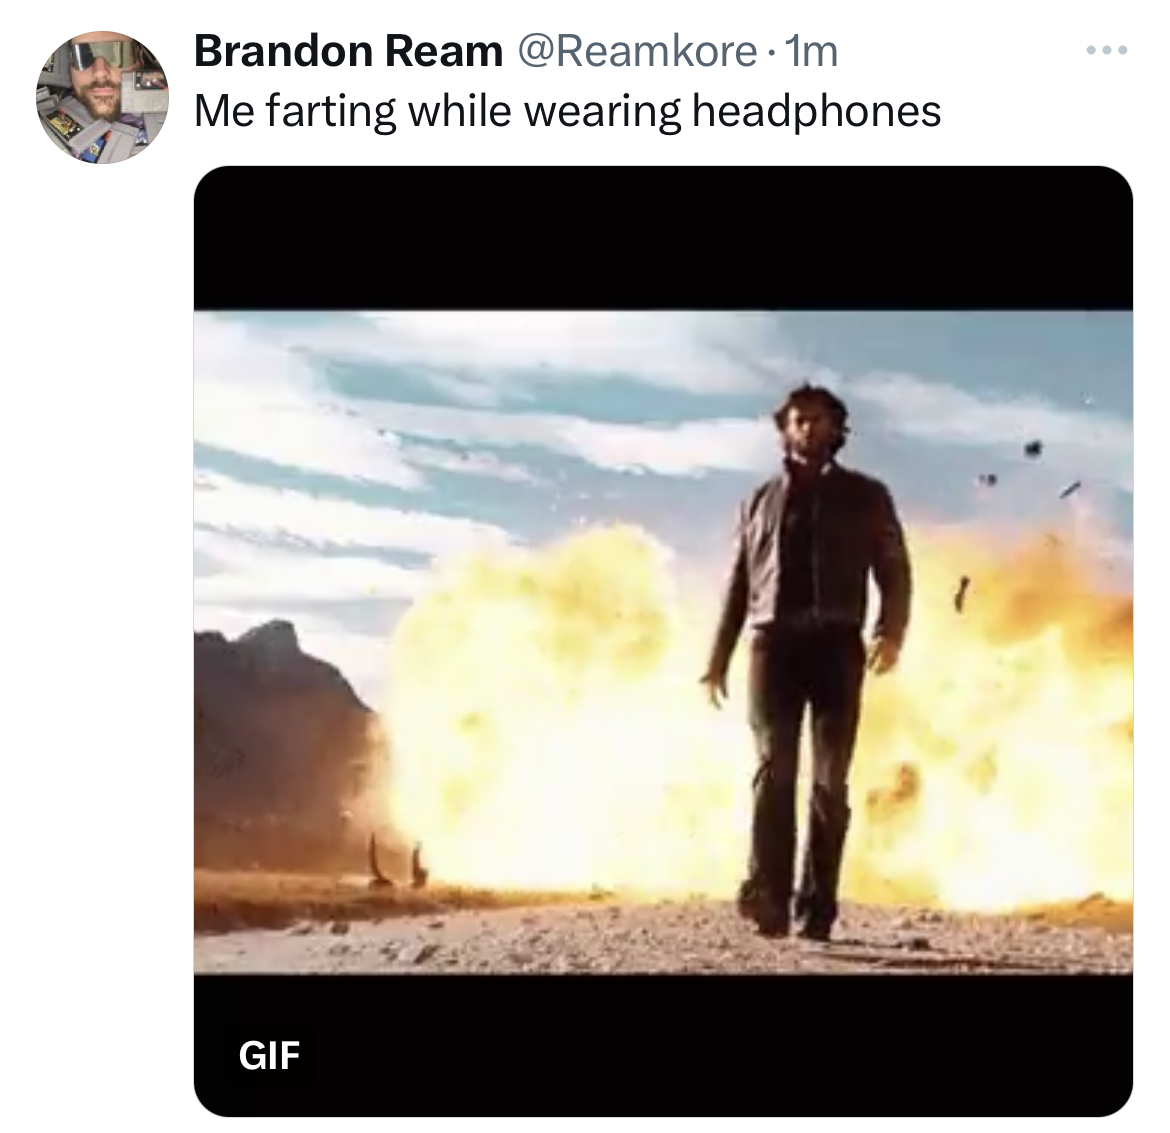 savage tweets - video - Brandon Ream 1m Me farting while wearing headphones Gif ...